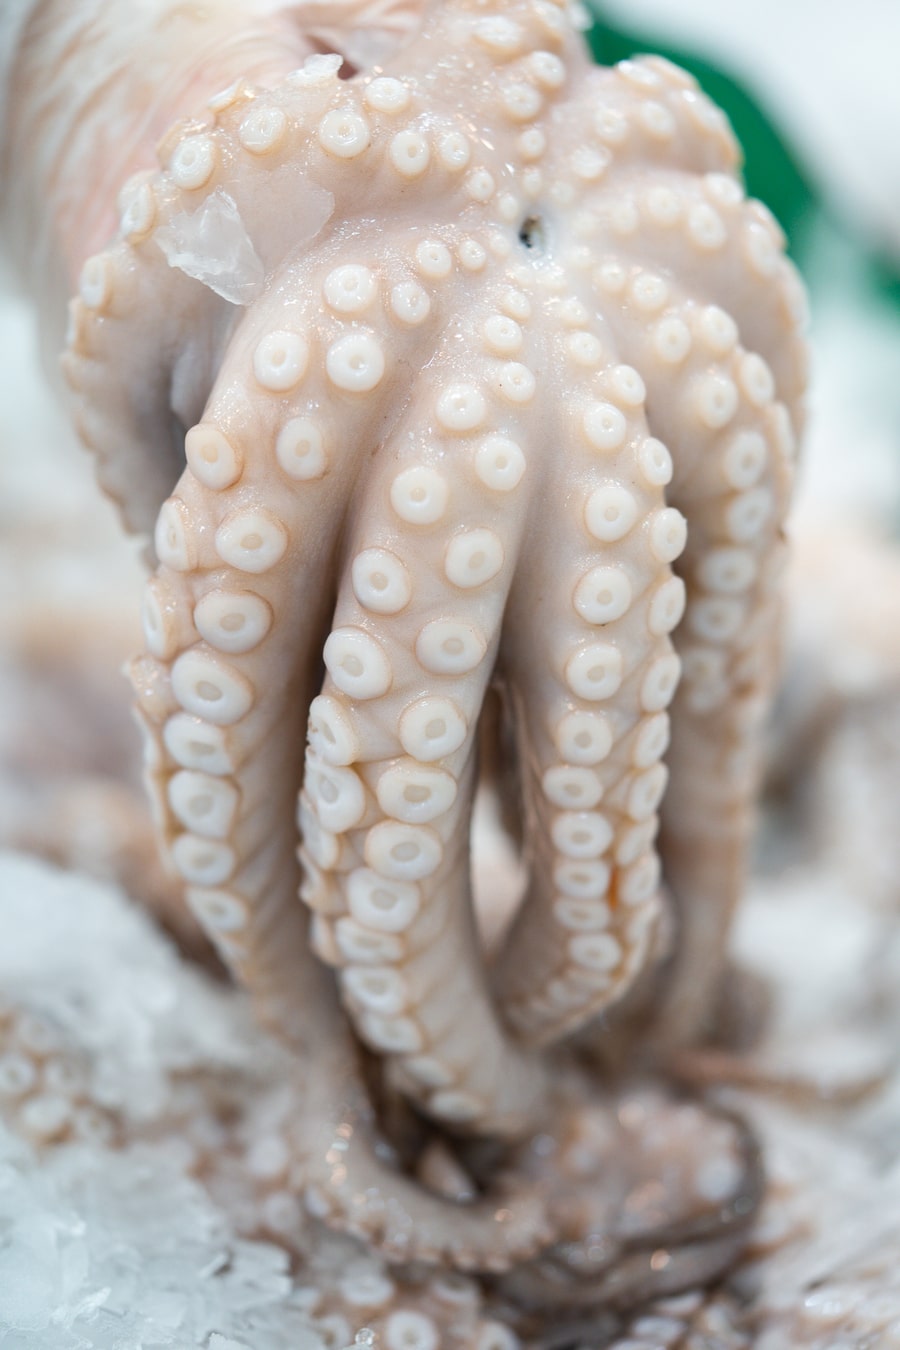 Medium Octopus Per 500g